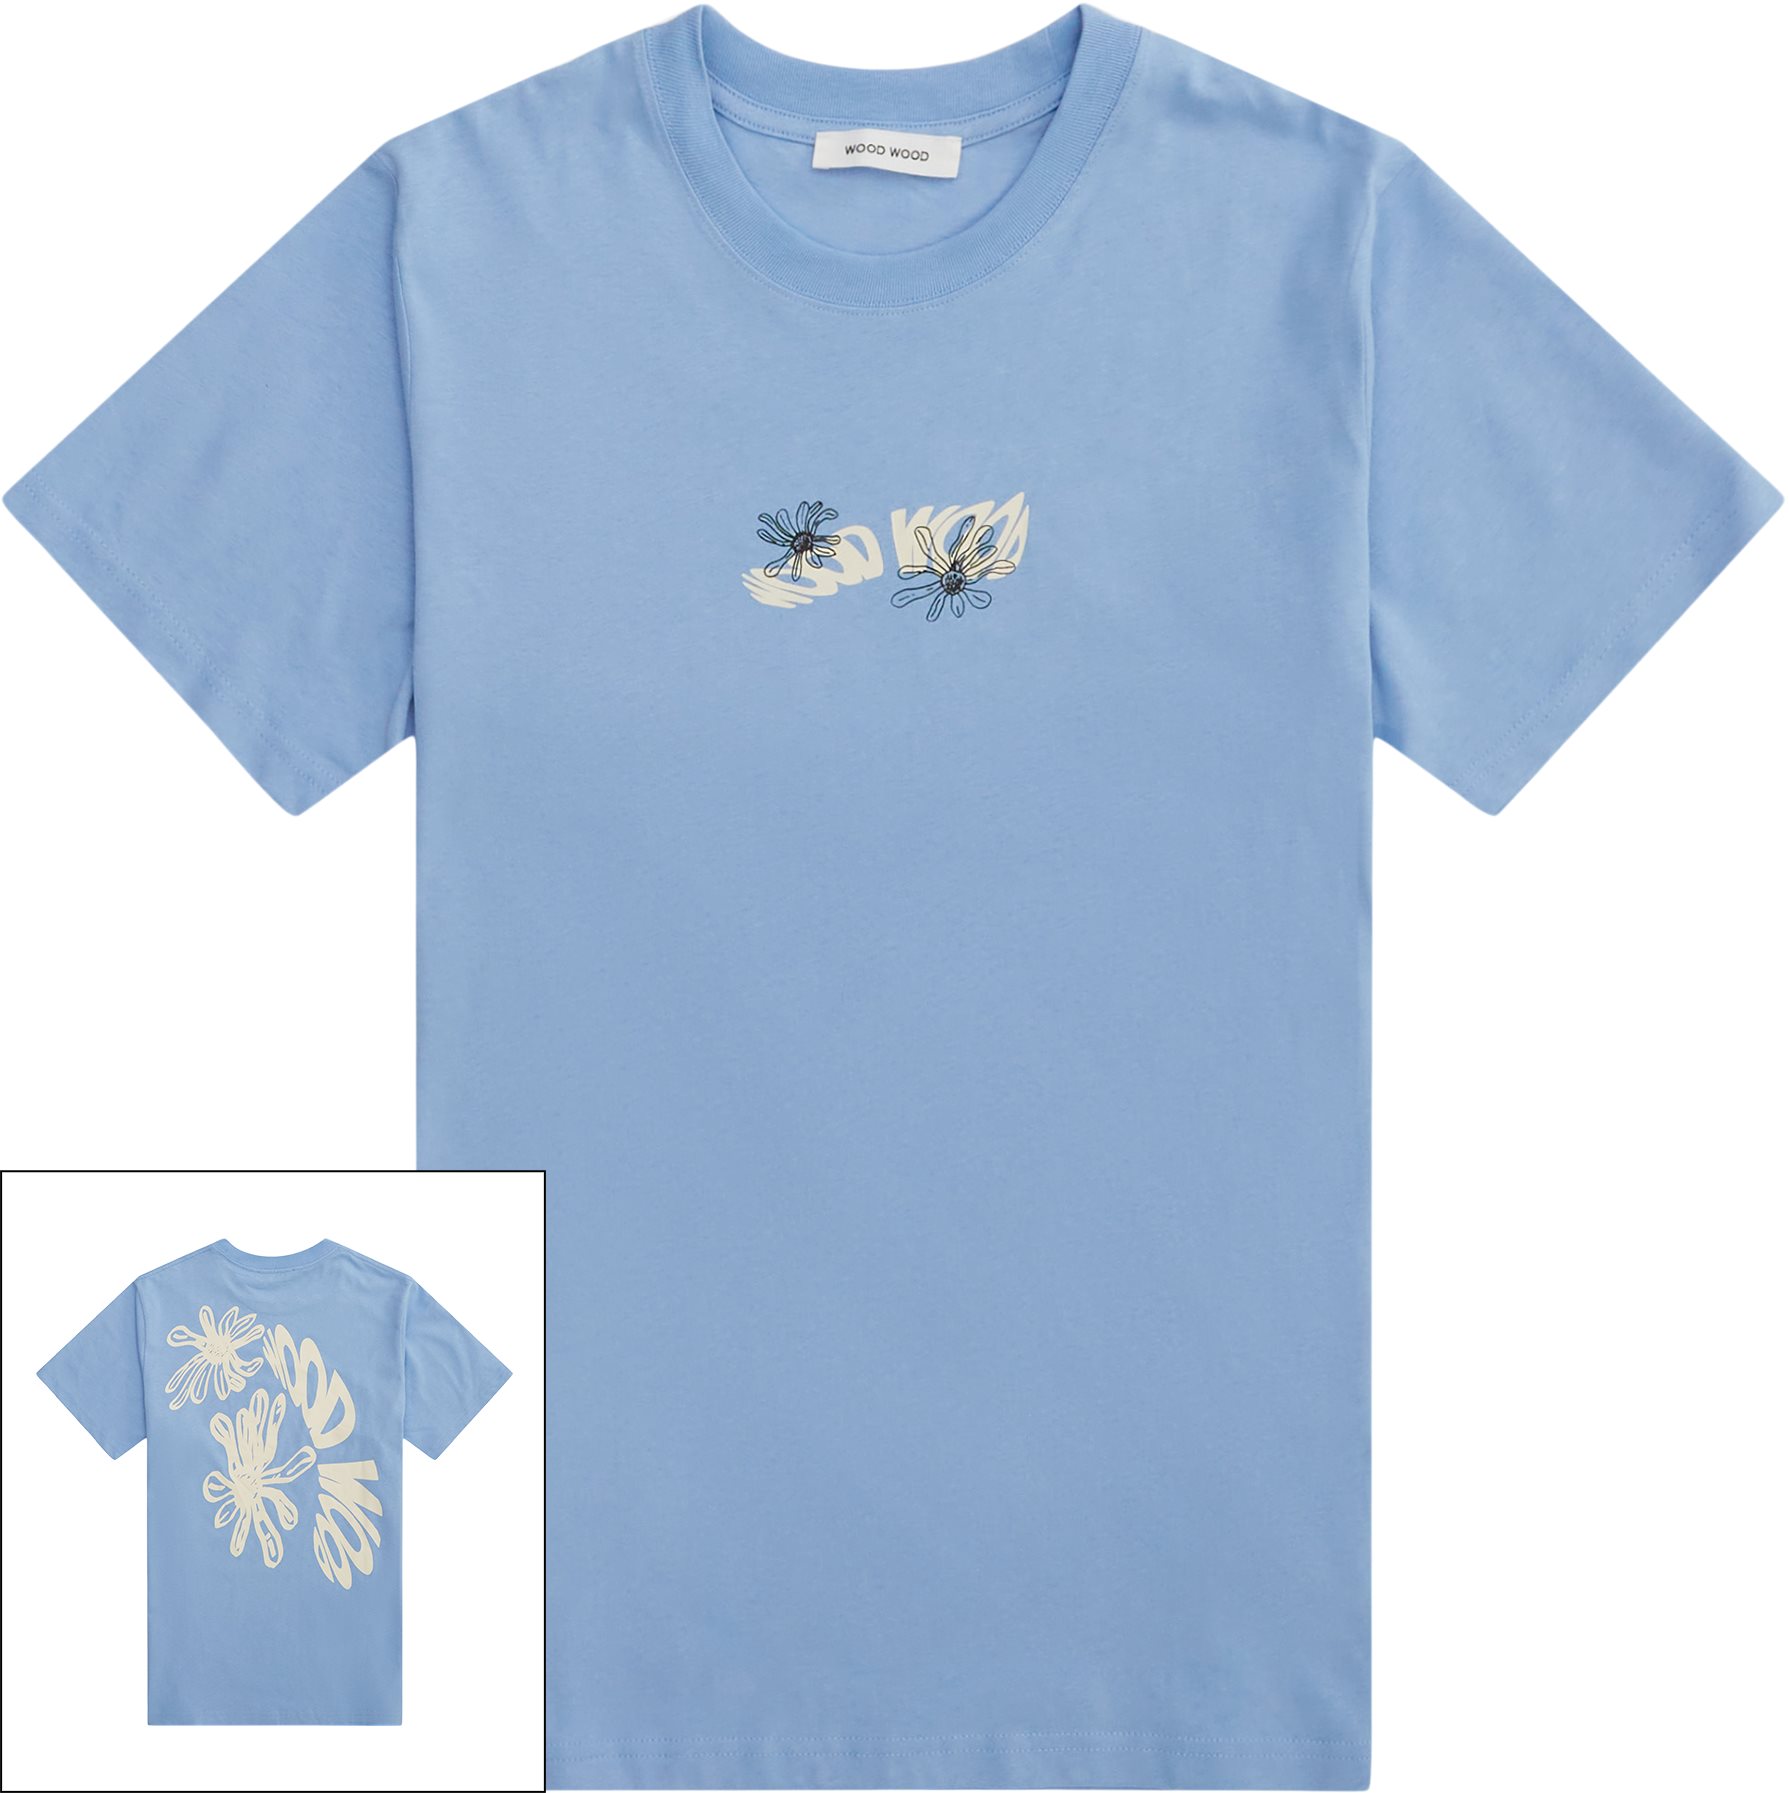 WOOD WOOD T-shirts BOBBY FLOWERS TEE 12415706-2447 Blå